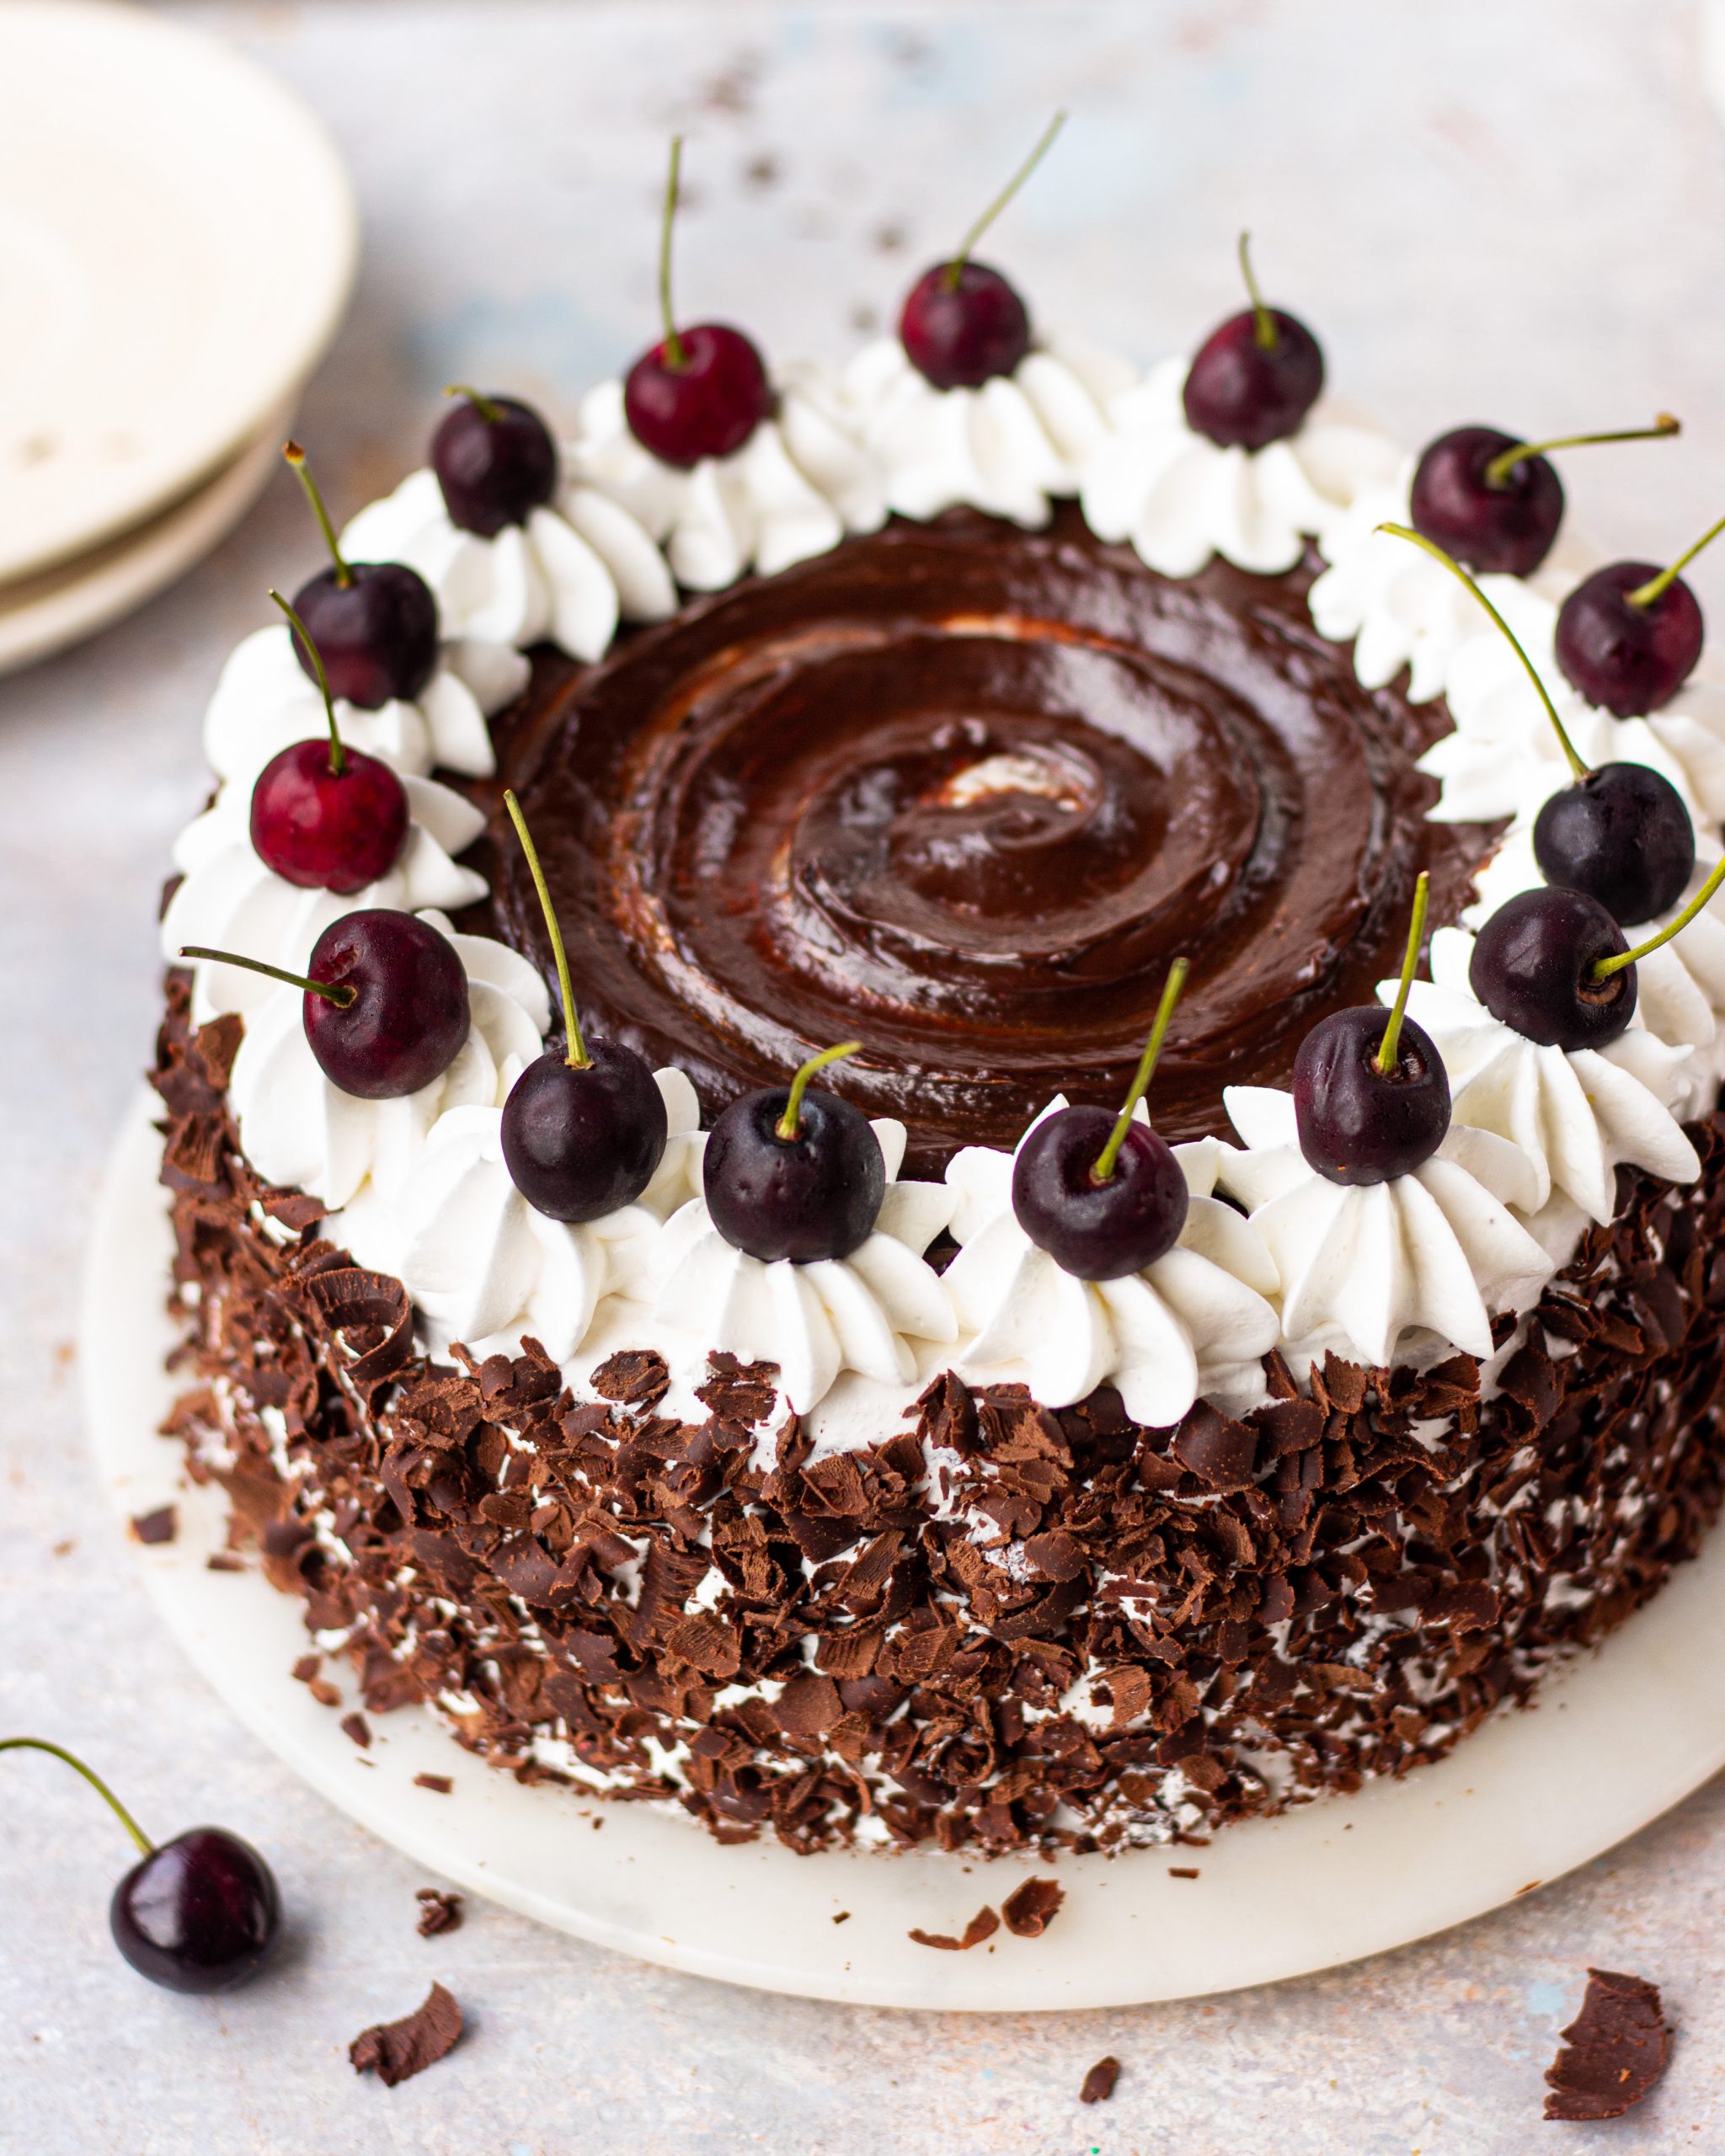 Buy 1kg Cake Online - Order 1kg Chocolate, Vanilla, Pineapple Cakes